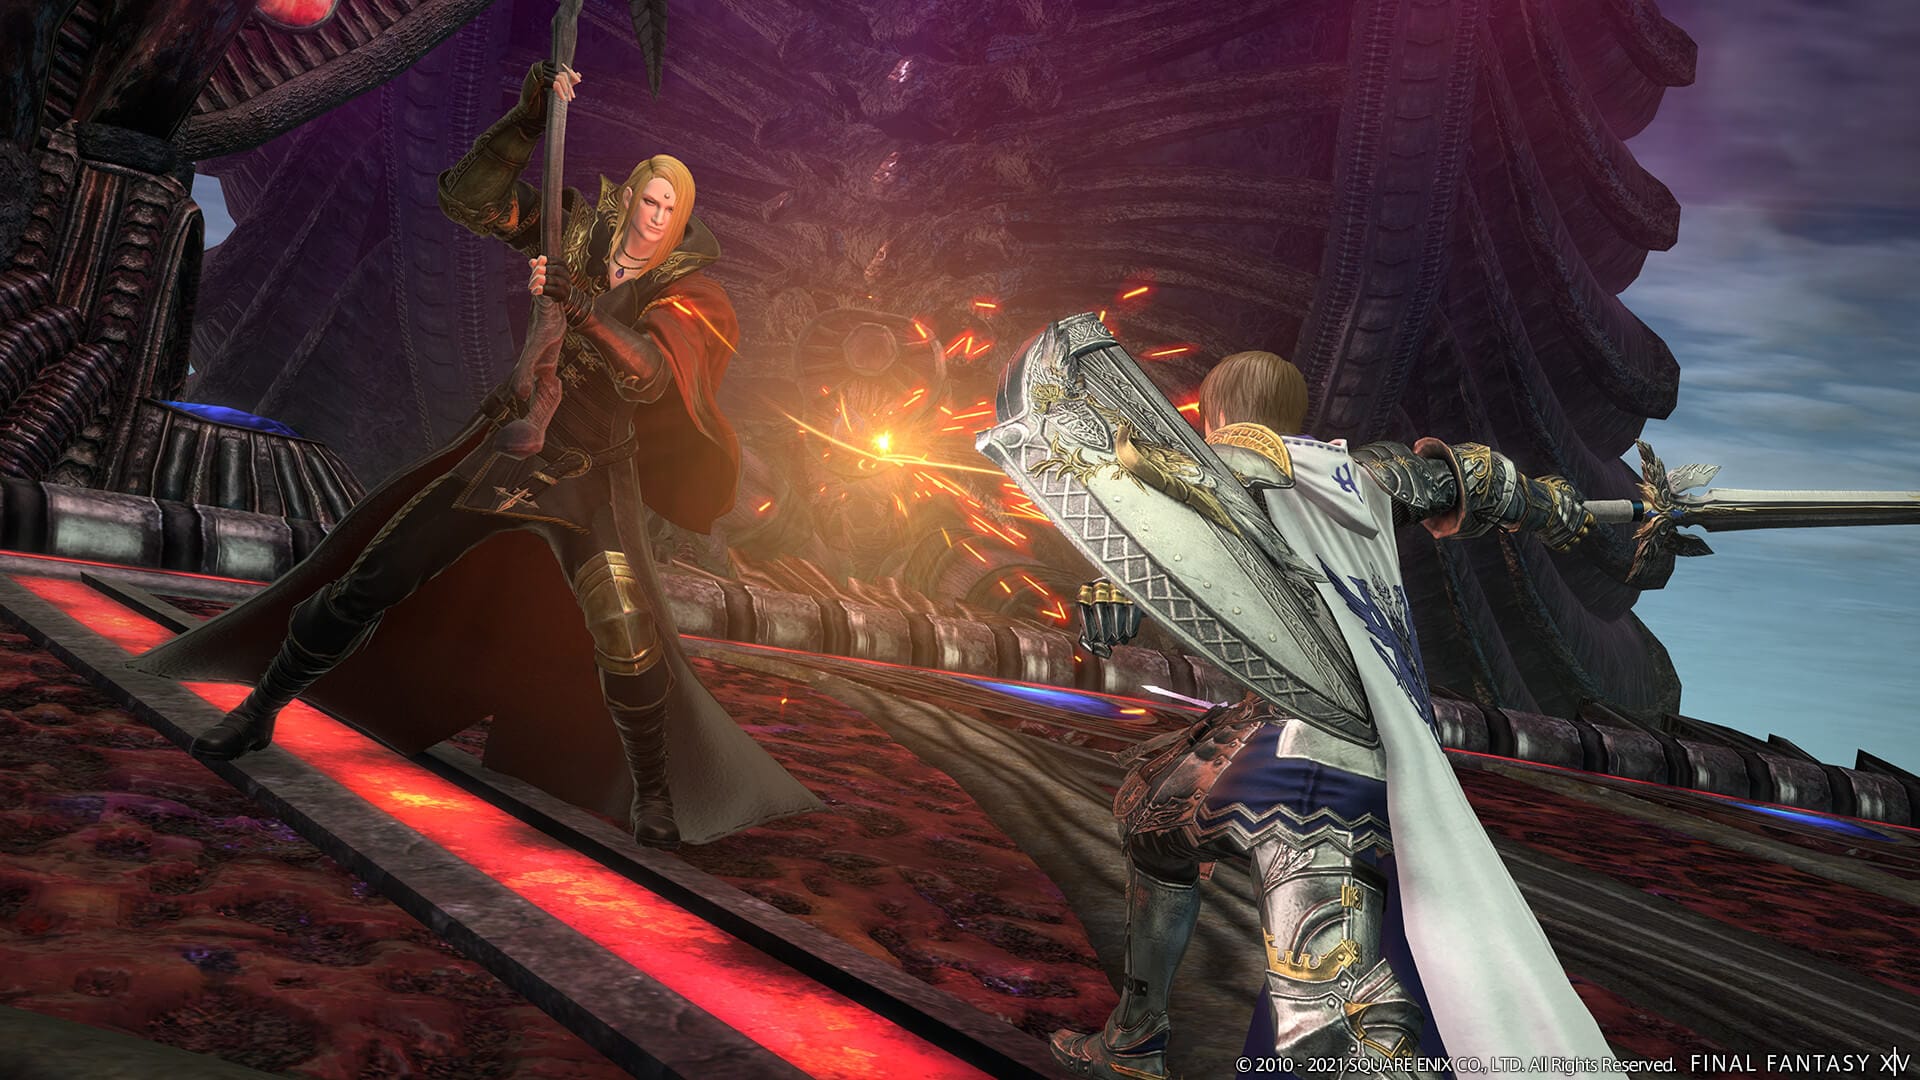 The Warrior of Light battling Zenos yae Galvus in Final Fantasy XIV: Endwalker